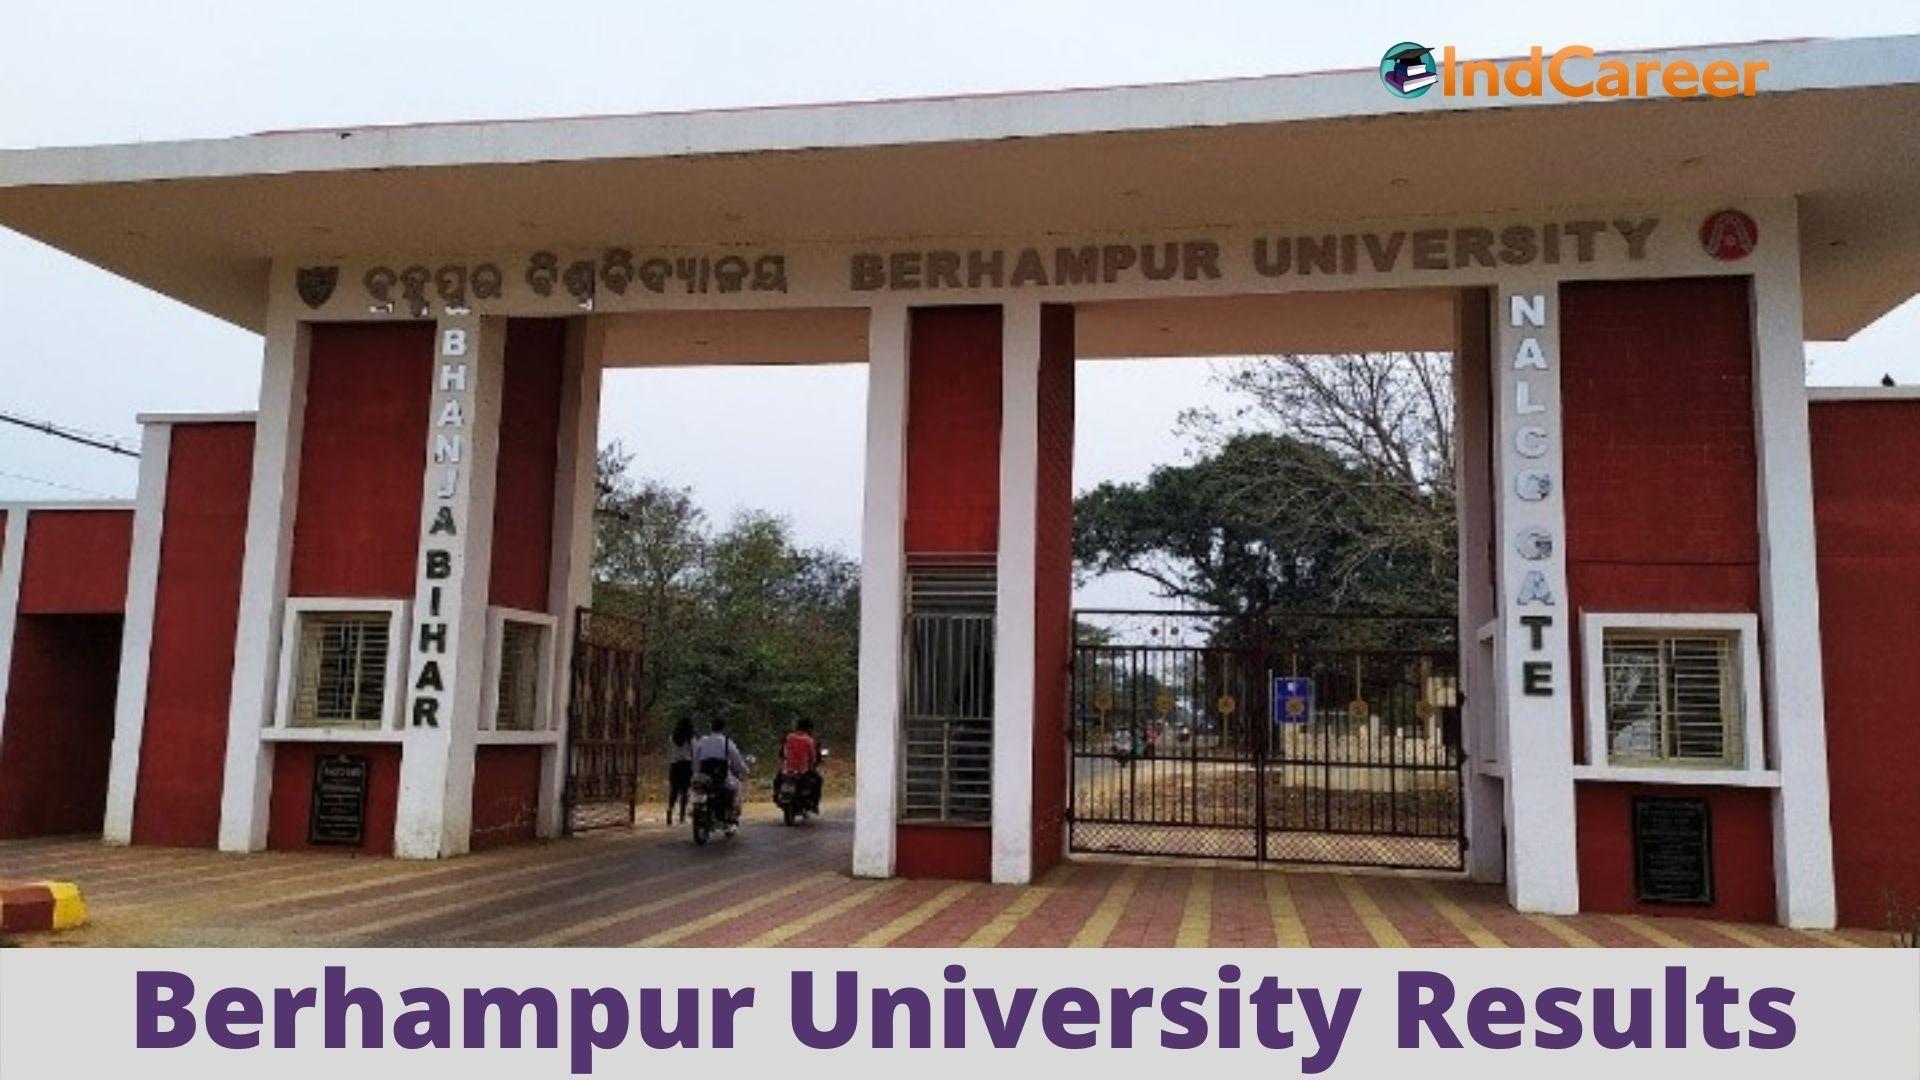 Alumni Association of Berhampur University